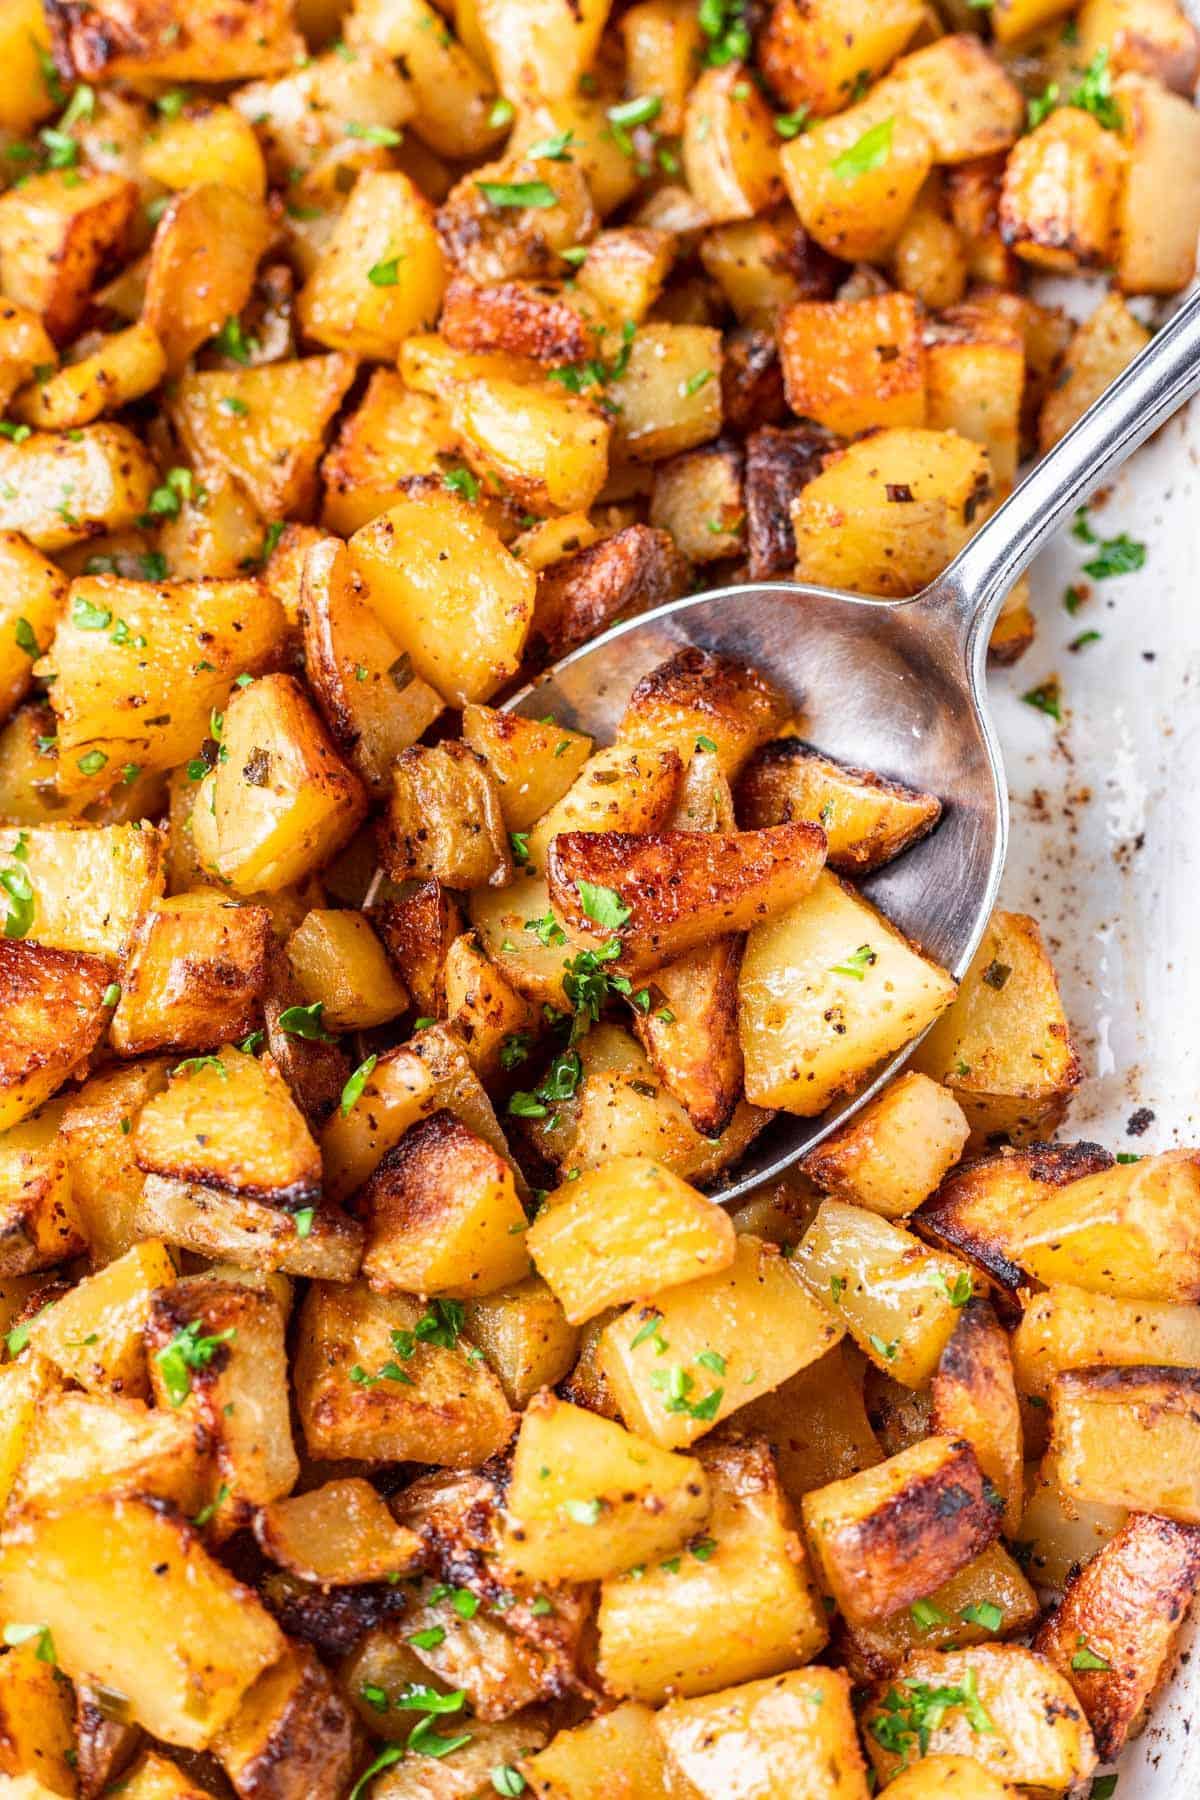 Roasted potatoes on a spoon.